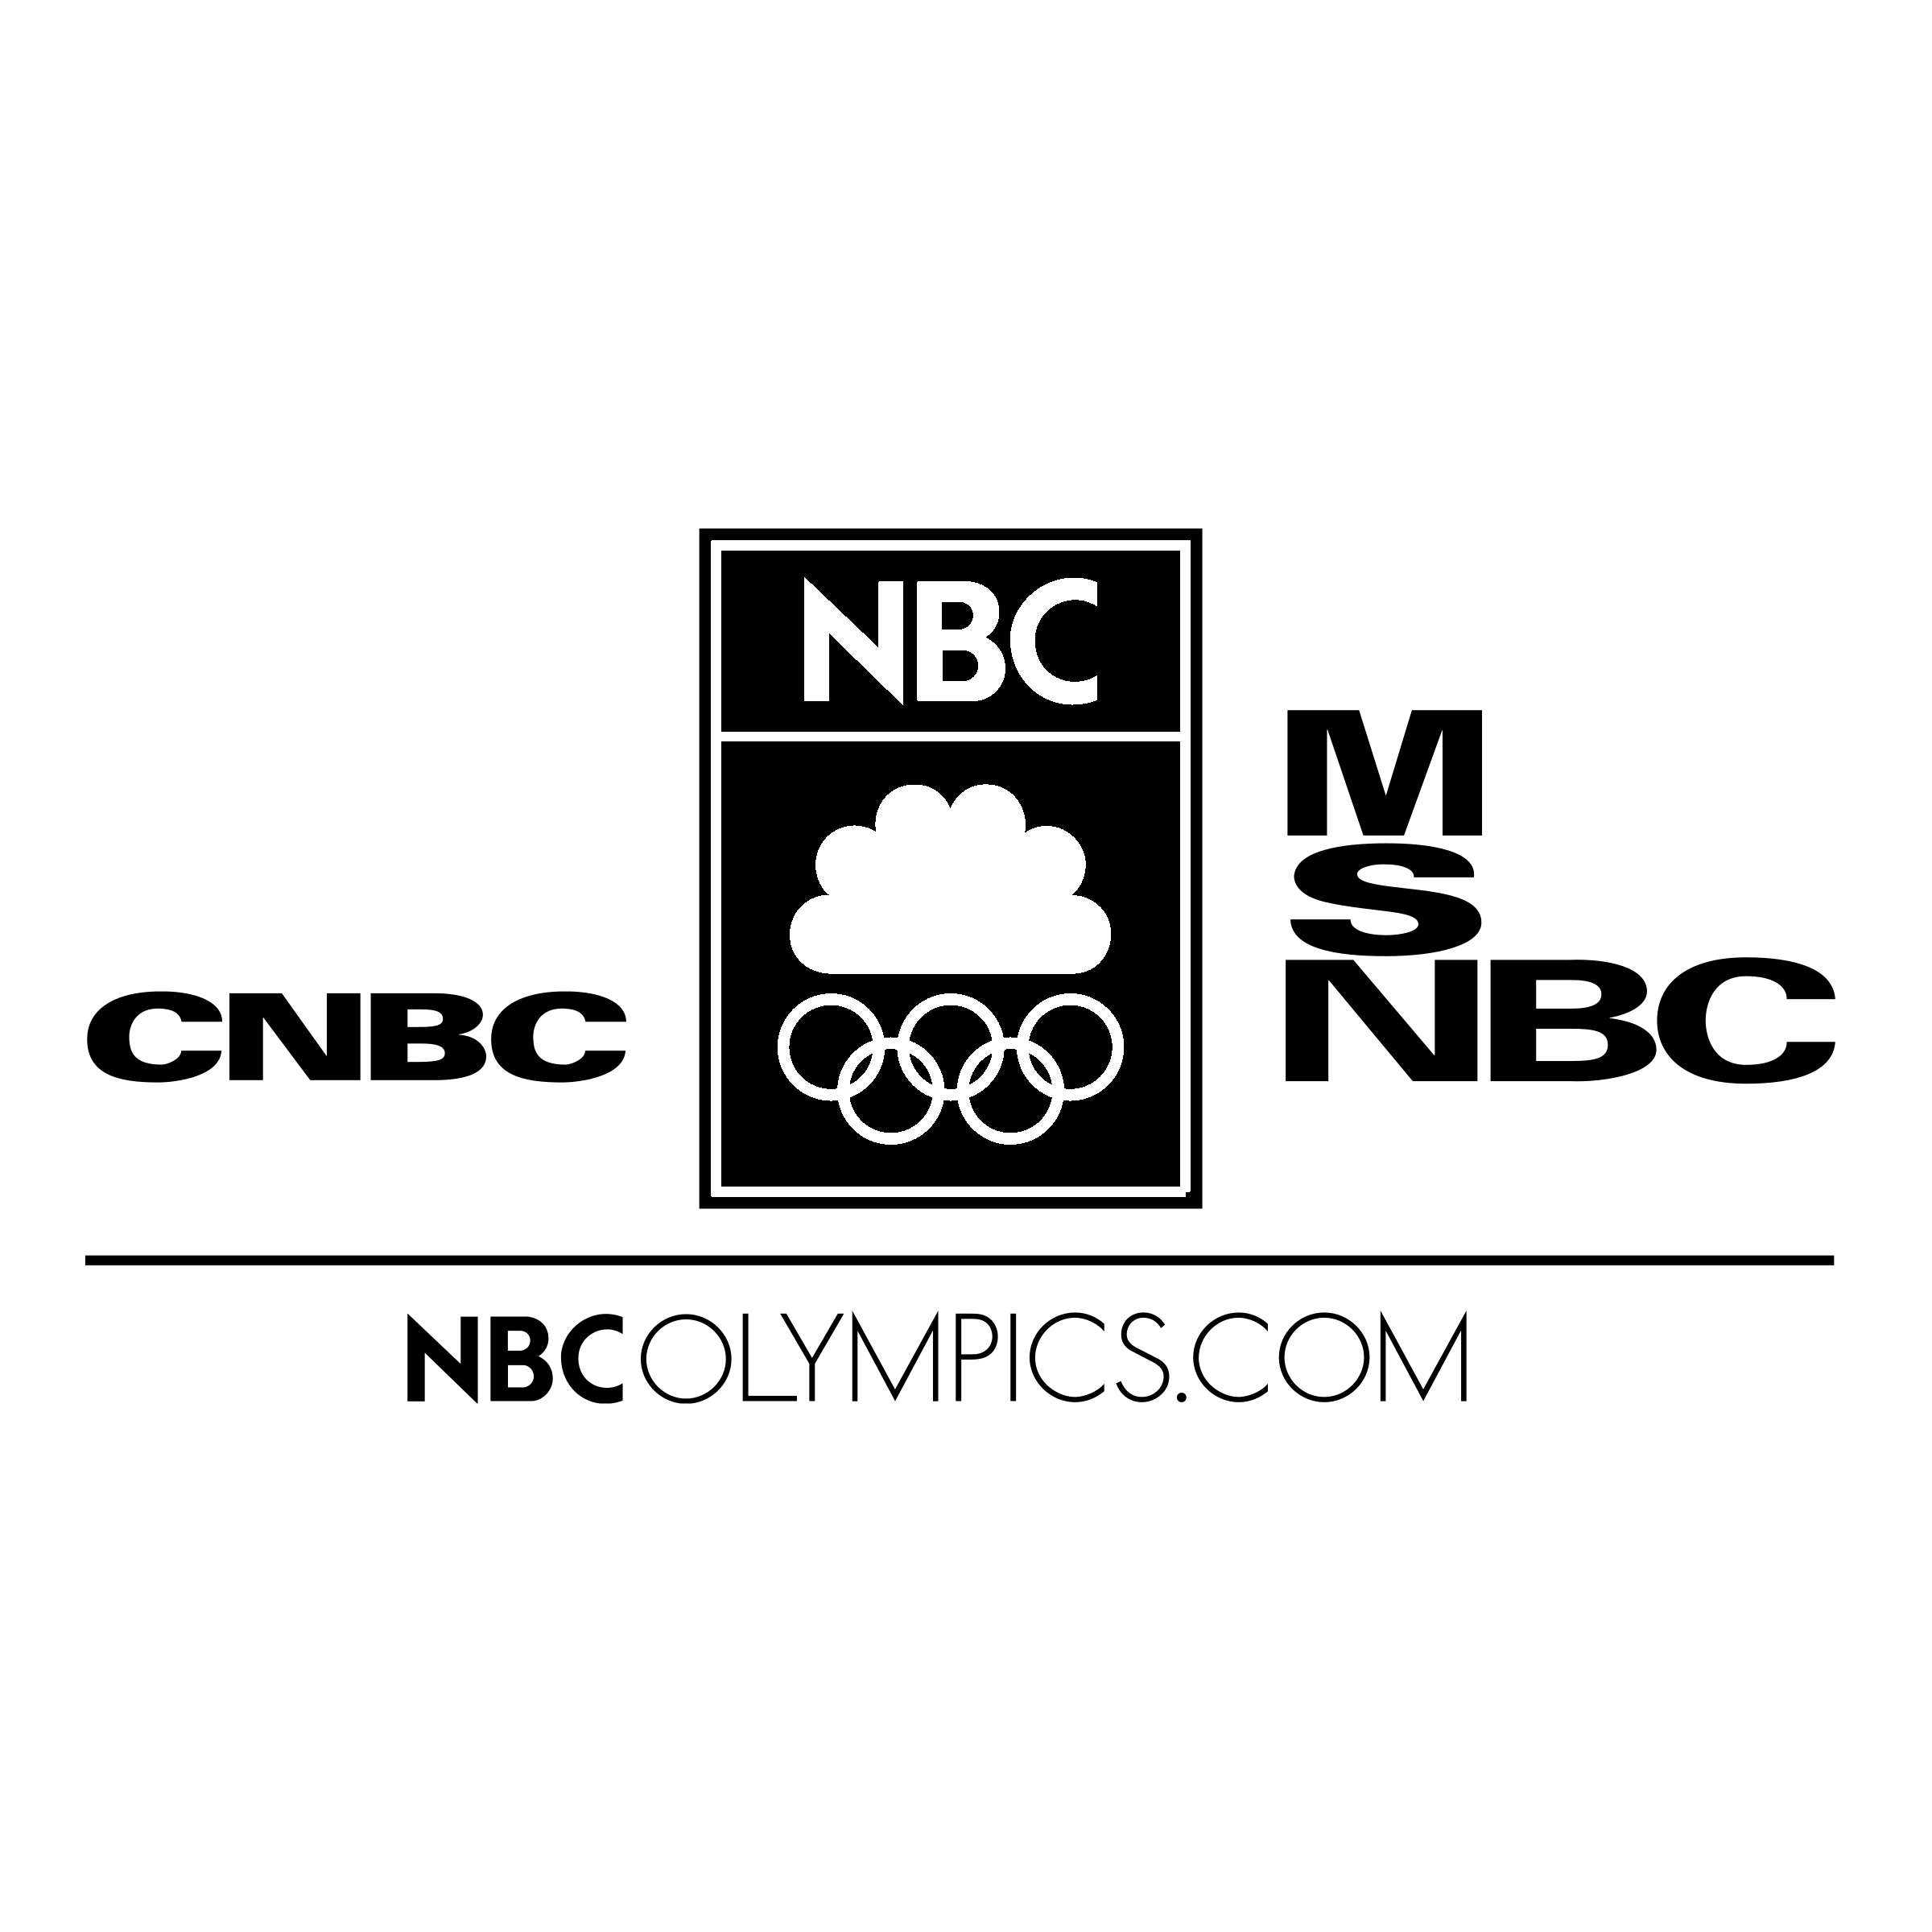 Nbcolympics.com Logo - NBC Olympics Logo PNG Transparent & SVG Vector - Freebie Supply